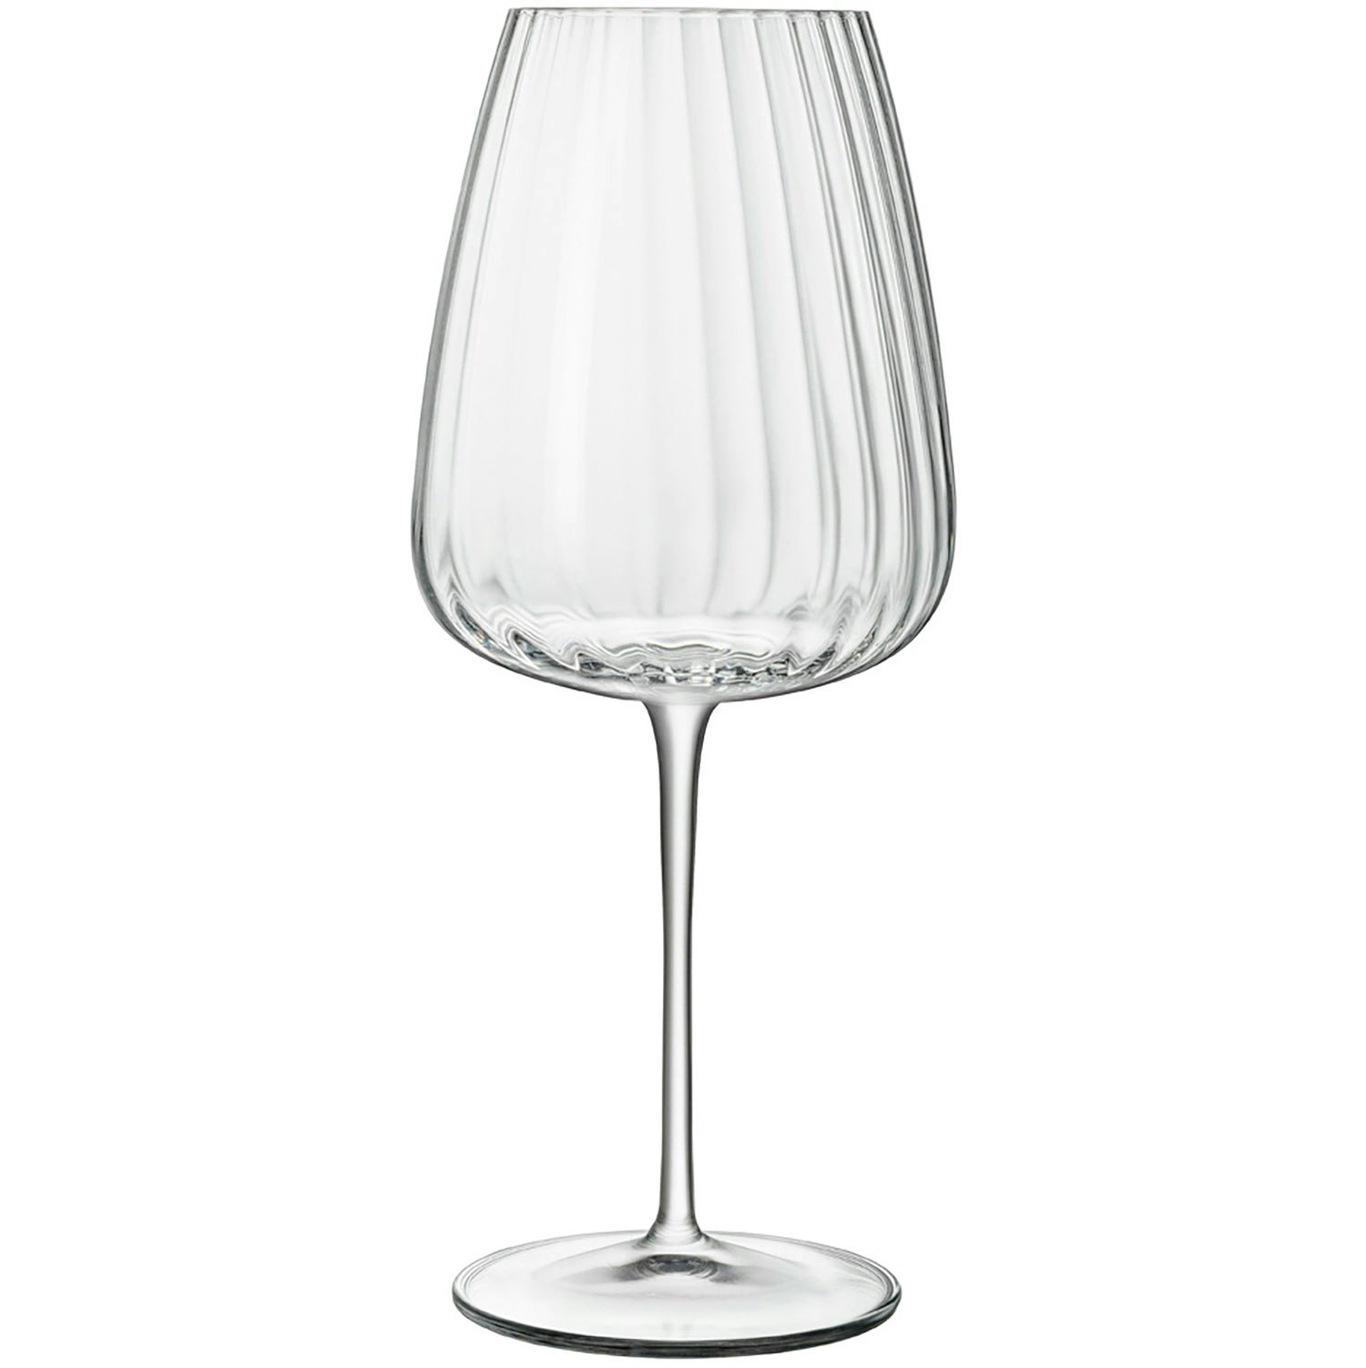 https://royaldesign.com/image/2/luigi-bormioli-red-wine-glass-bordeaux-optica-70-cl-4-pcs-0?w=800&quality=80